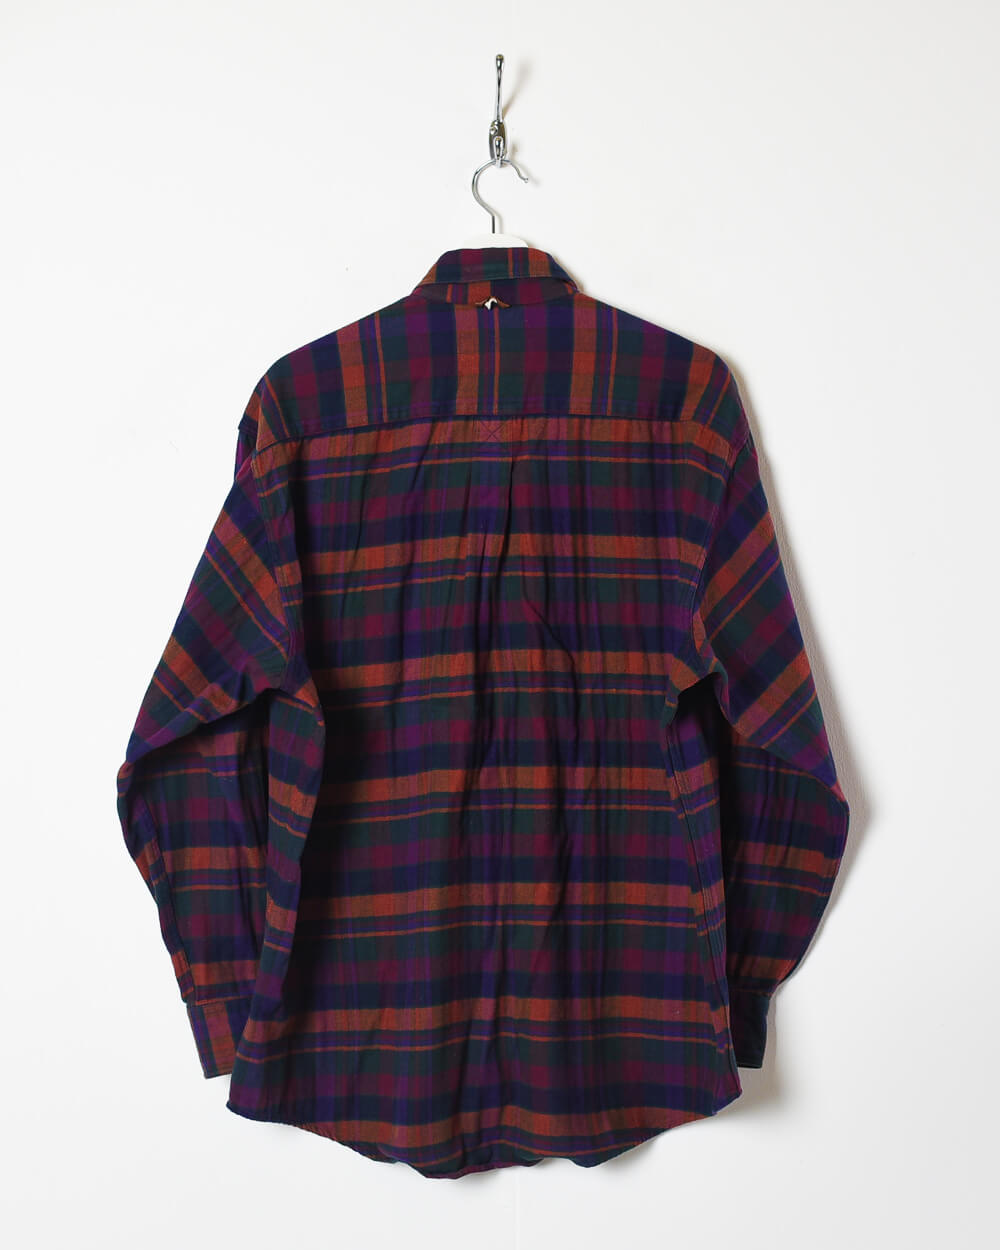 Multi Timberland Flannel Shirt - Large